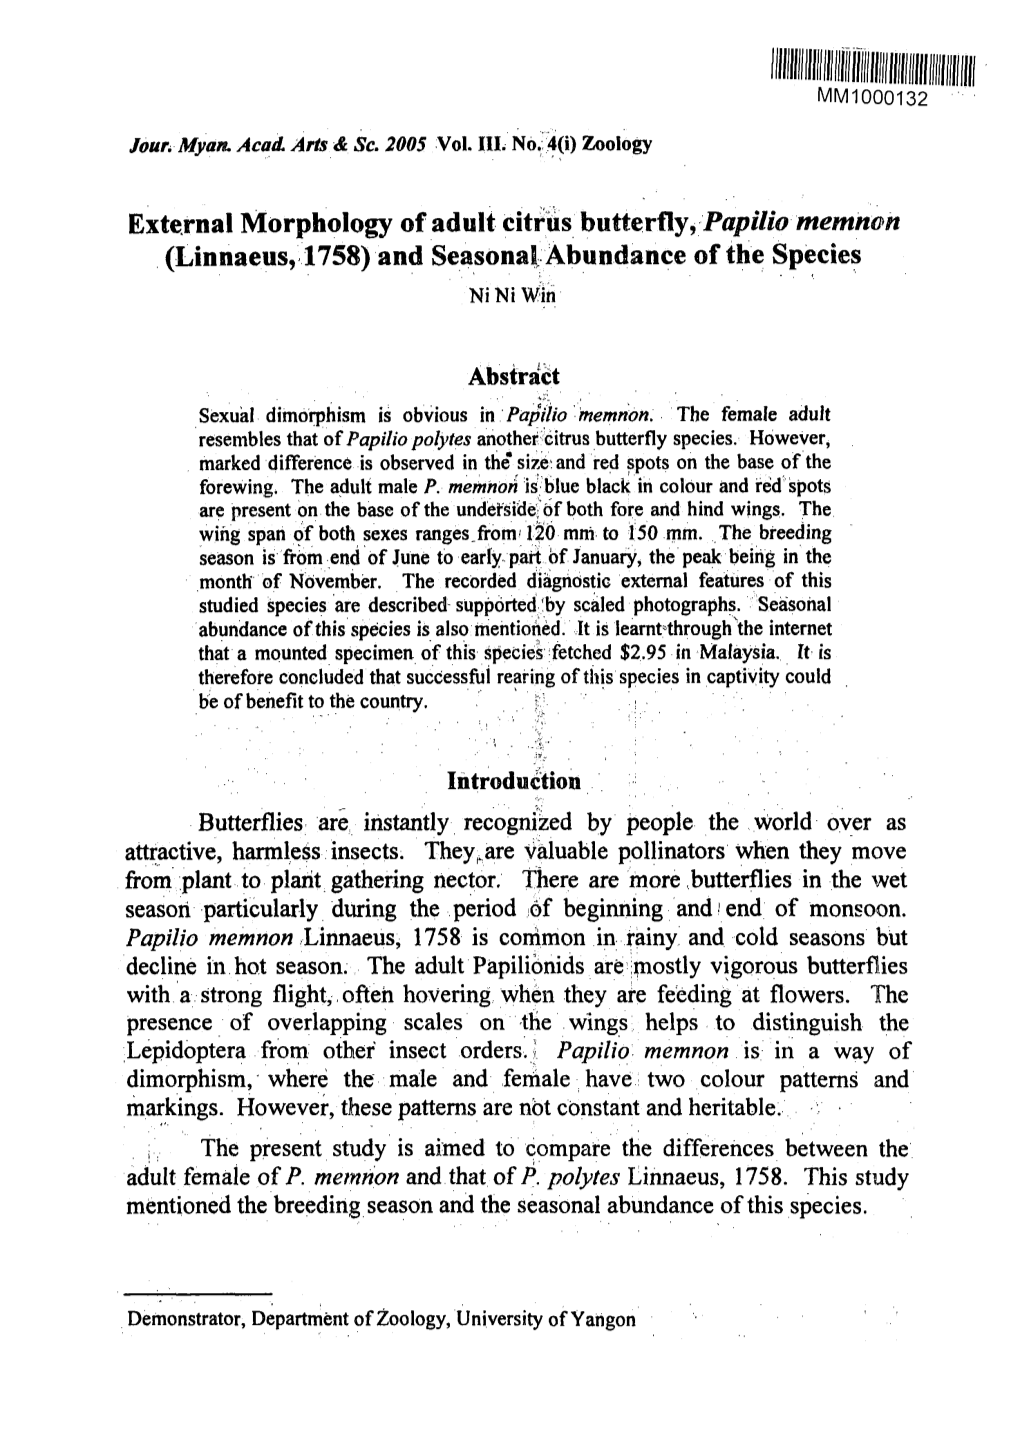 External Morphology of Adult Citrus Butterfly, Papilio Memnon (Linnaeus, 1758) and Seasonal Abundance of the Species Niniwin